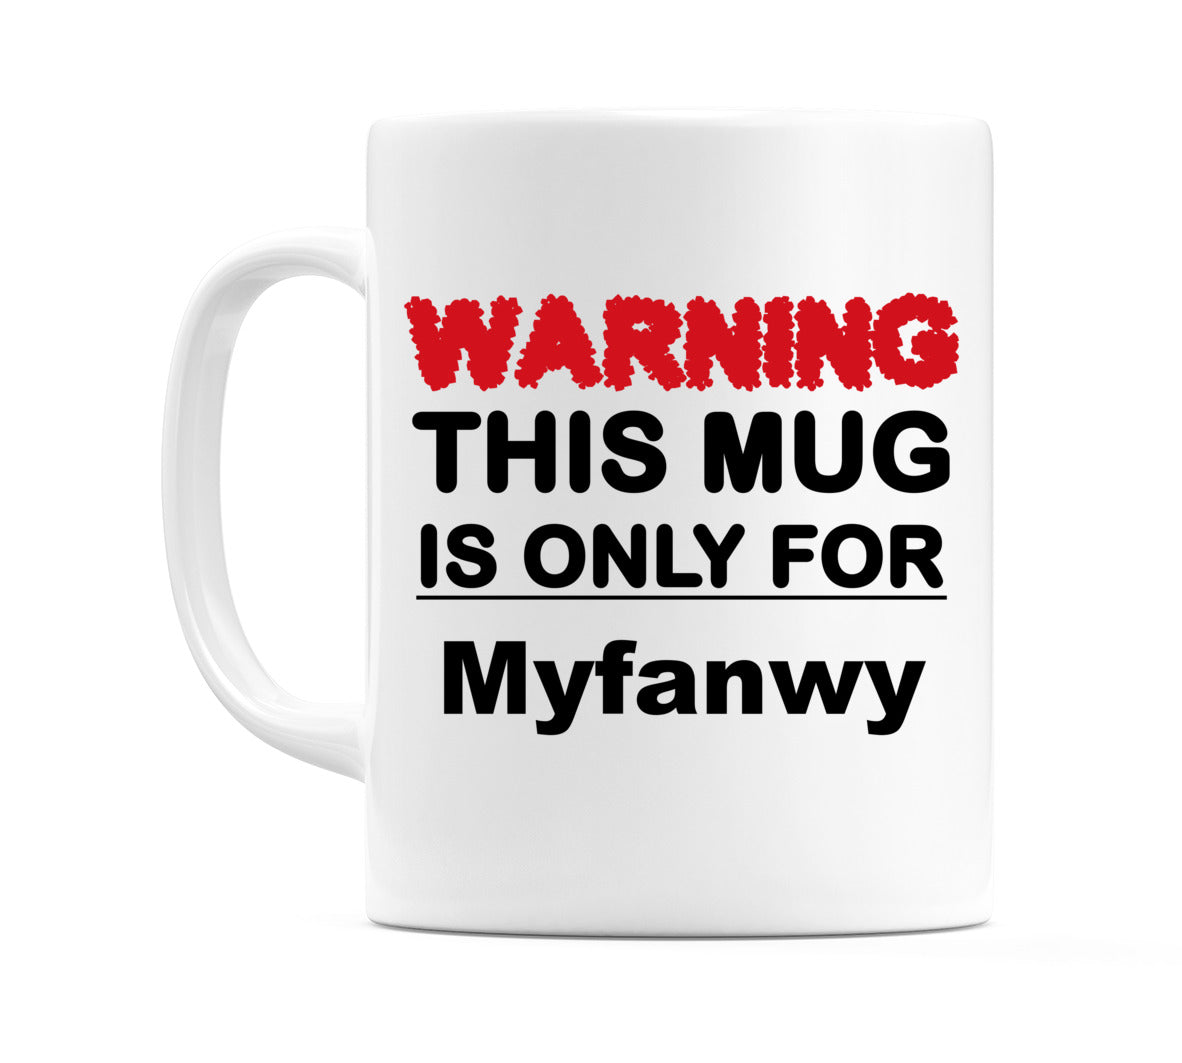 Warning This Mug is ONLY for Myfanwy Mug